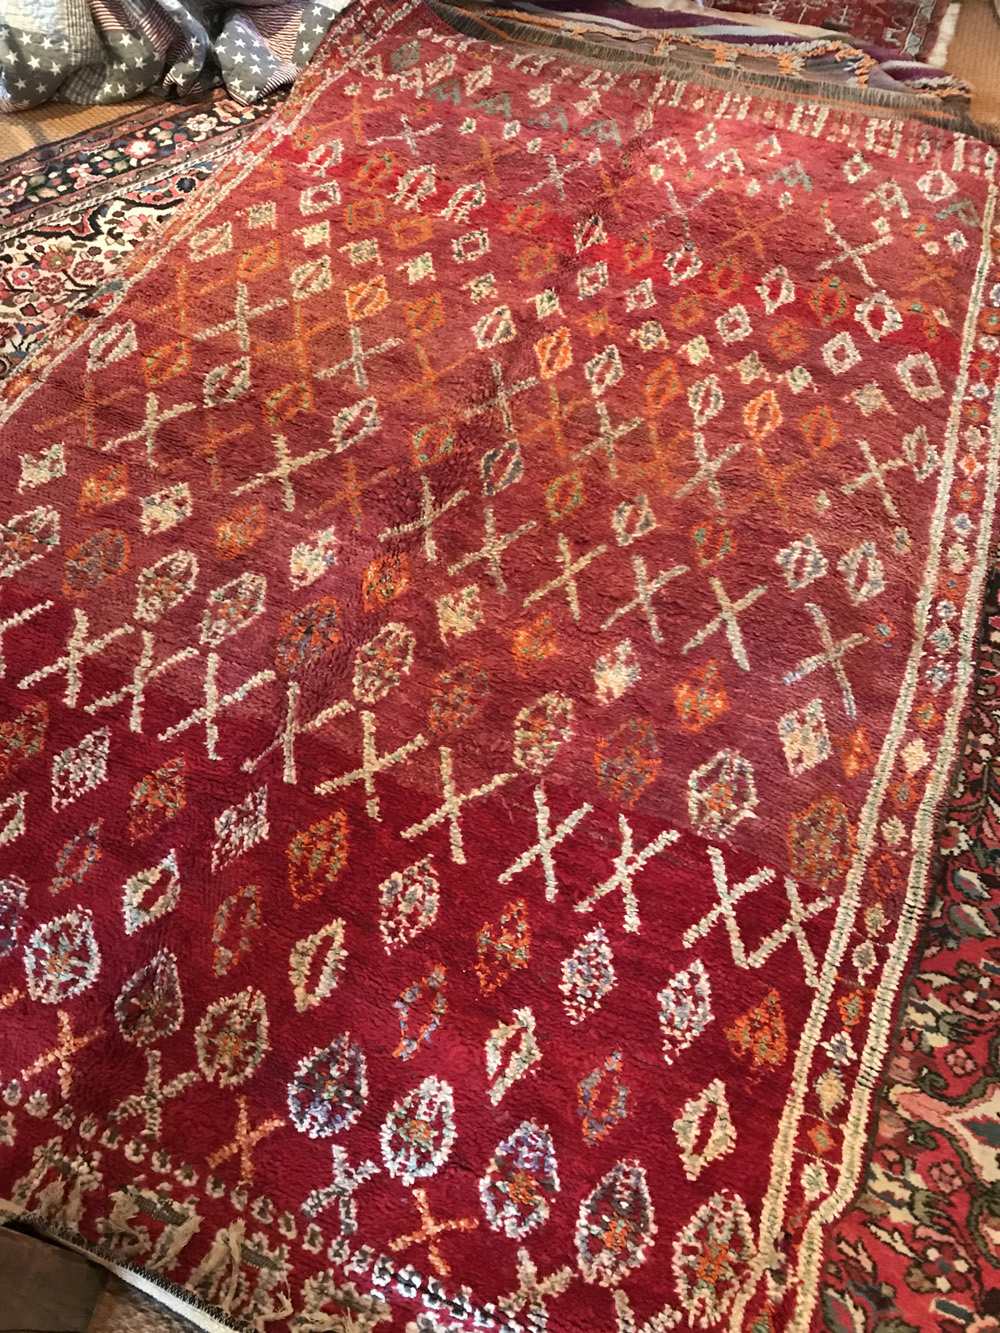 185-67700 Carpet Rug Maroc BENI MGUILD 2,60 x 1,65 m